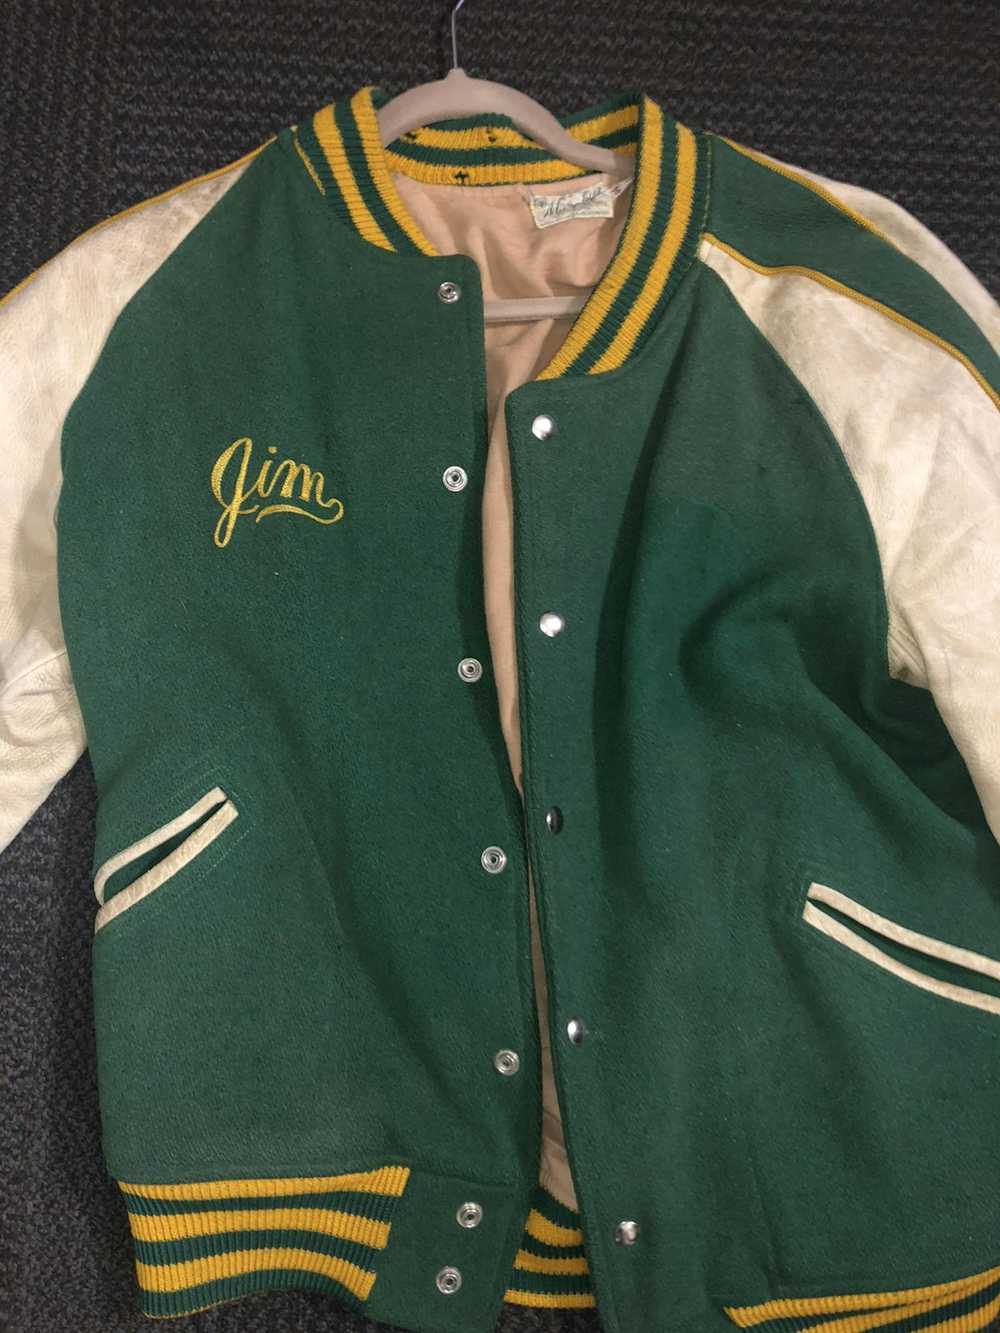 Vintage Vintage “Jim” varsity jacket - image 2